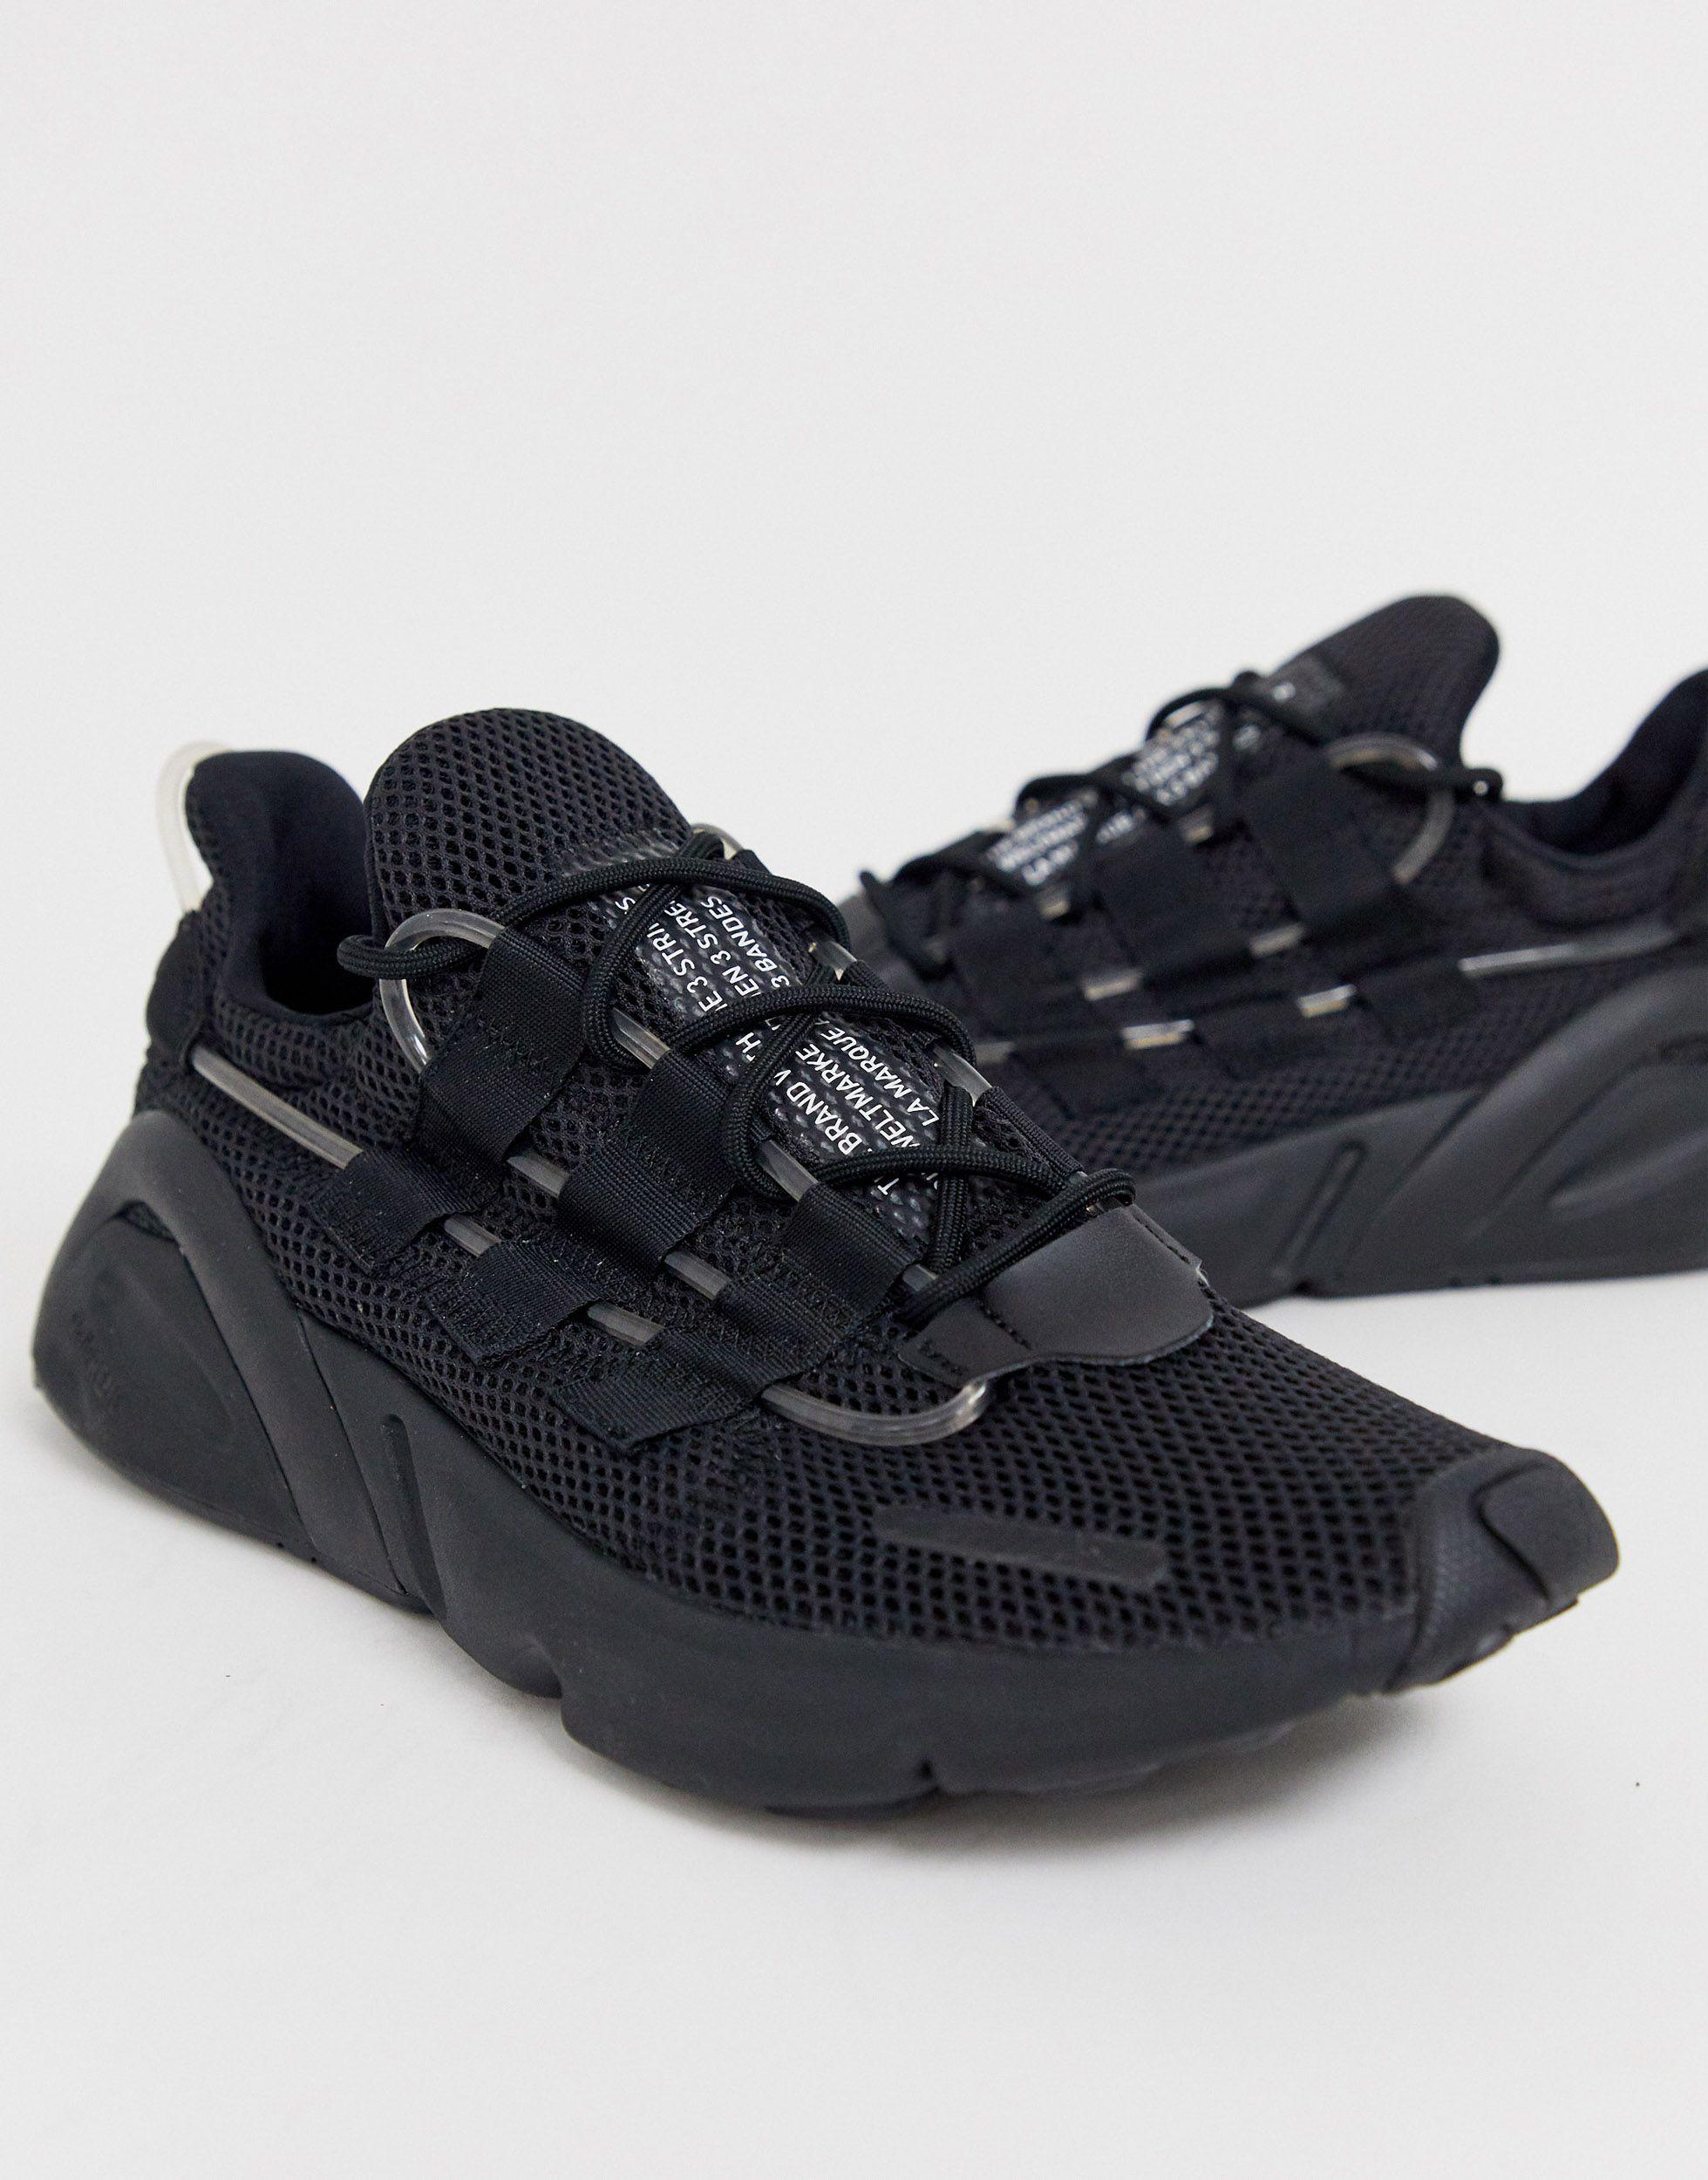 ALL.chaussure lxcon noir > Off 59% www.zerintios.com